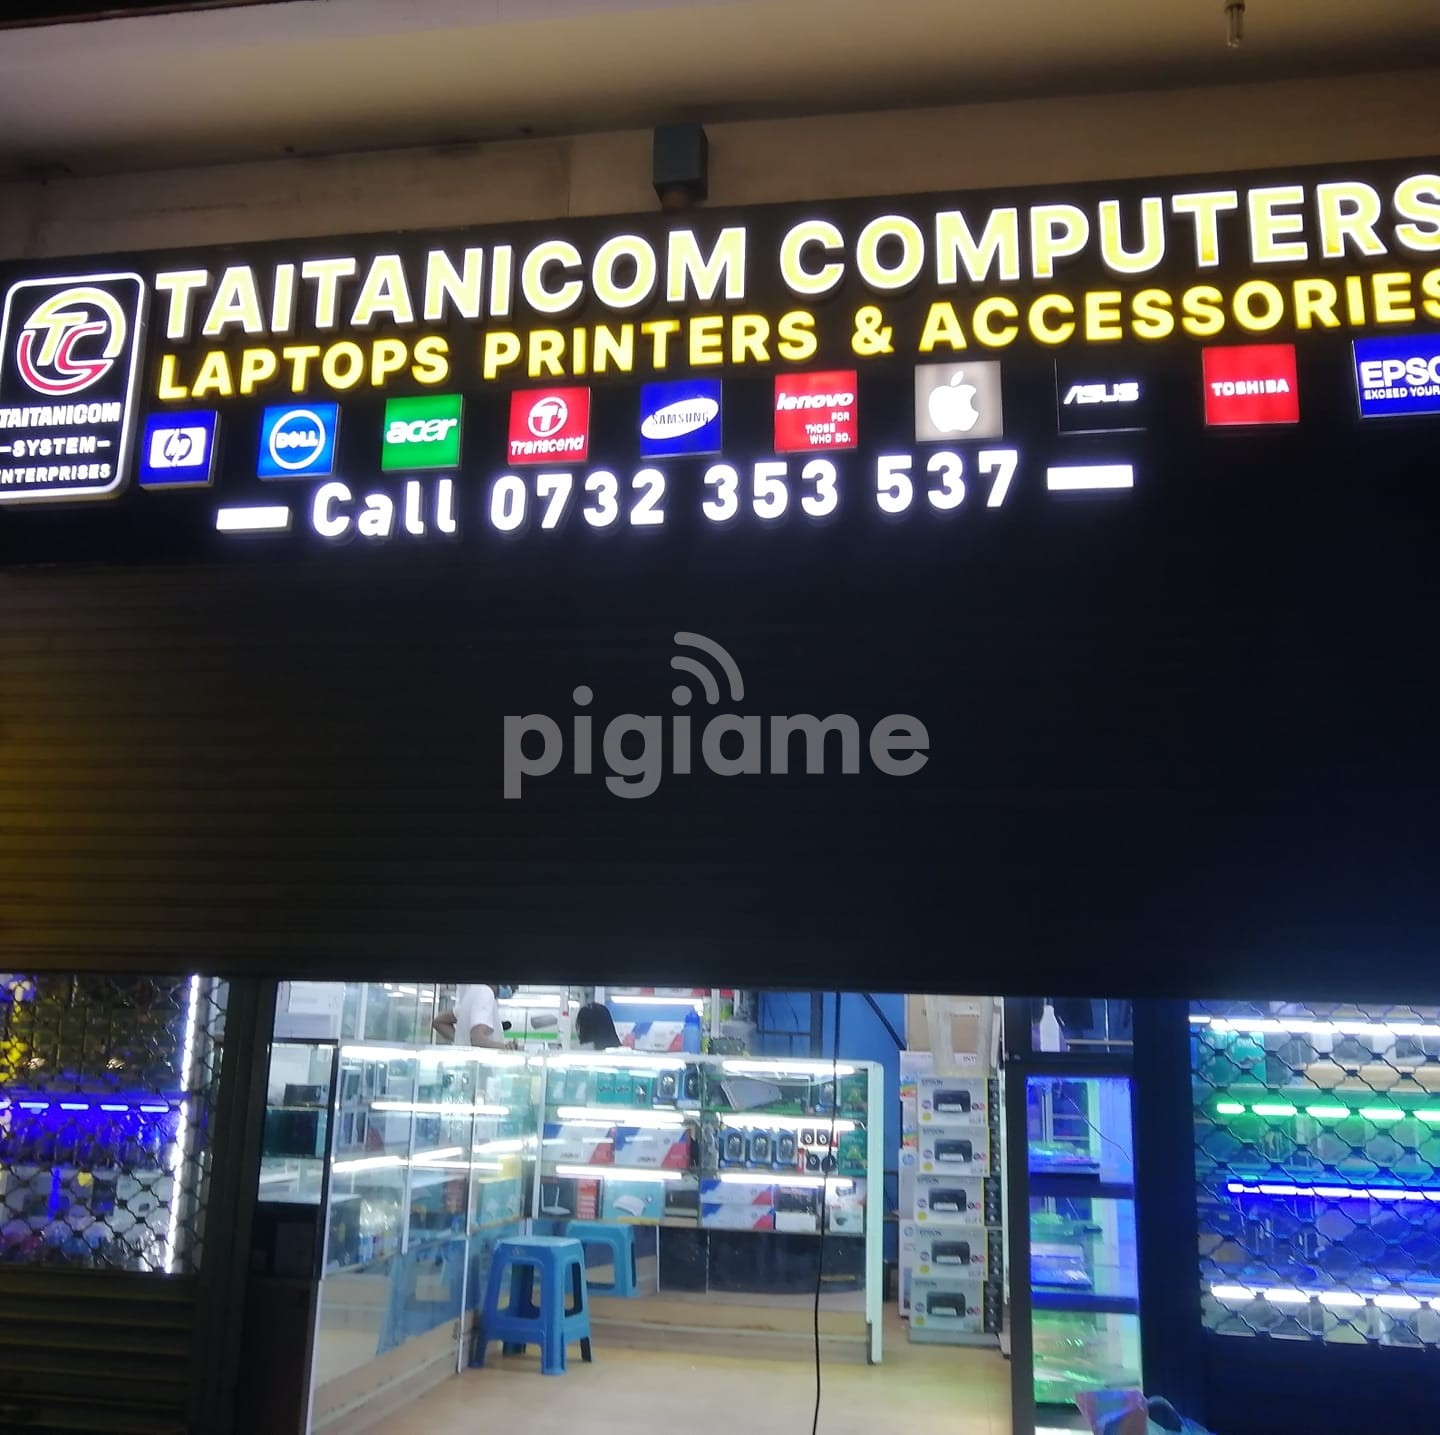 Taitanicom System Enterprises